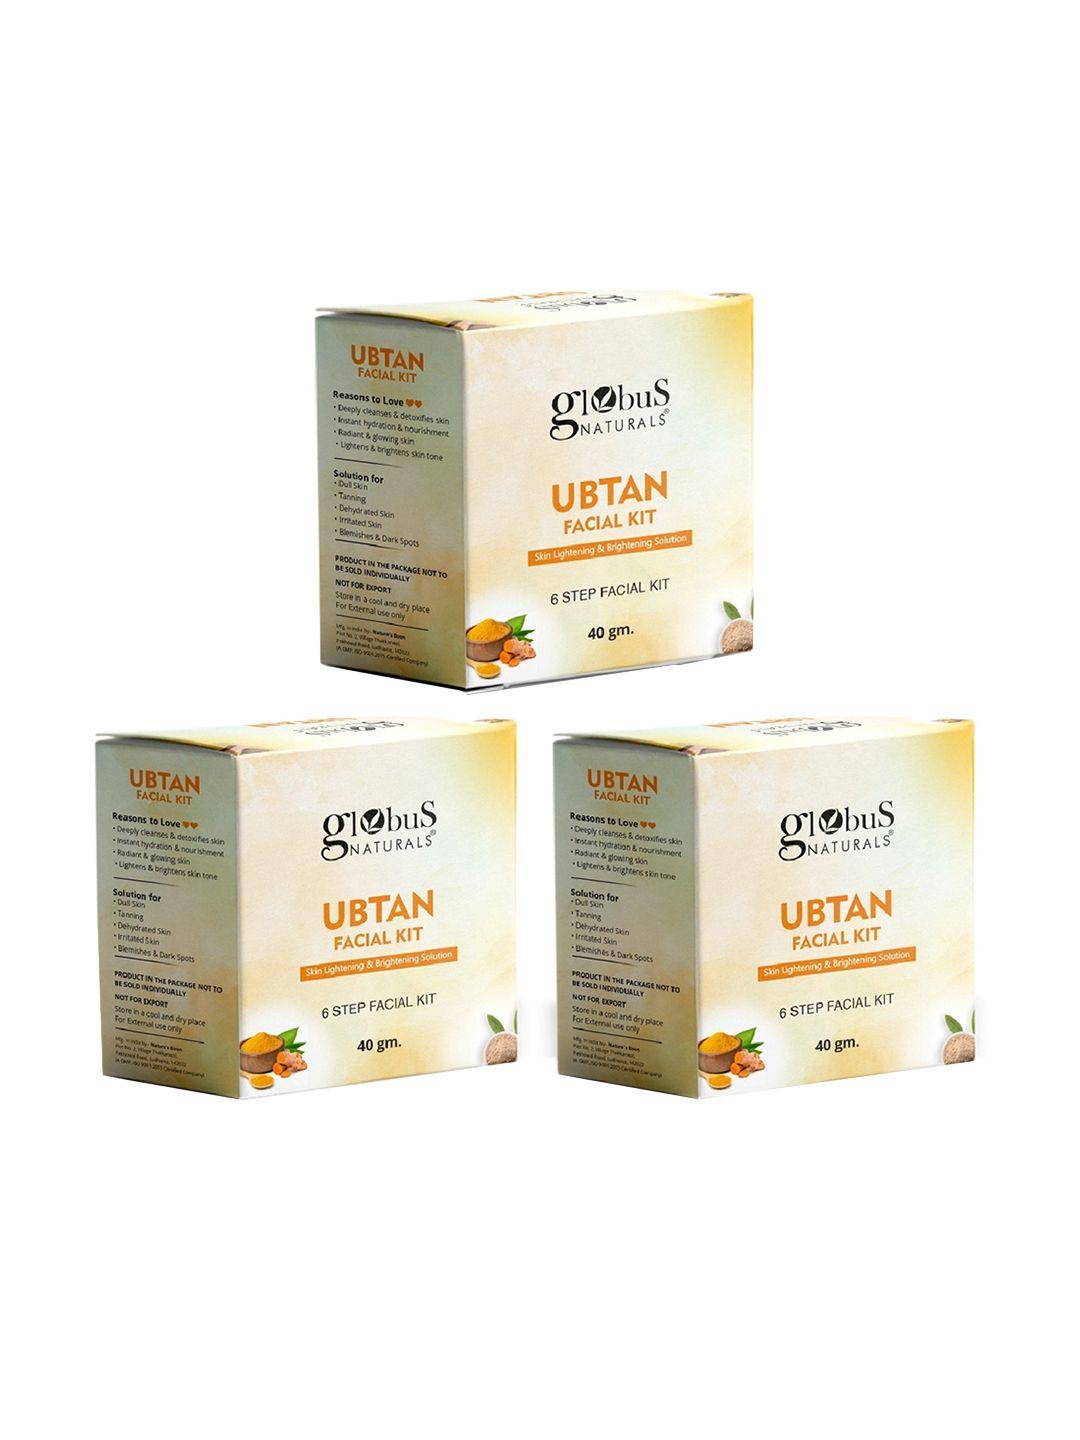 globus naturals set of 3 ubtan 6 step facial kit for skin lightening - 40 g each